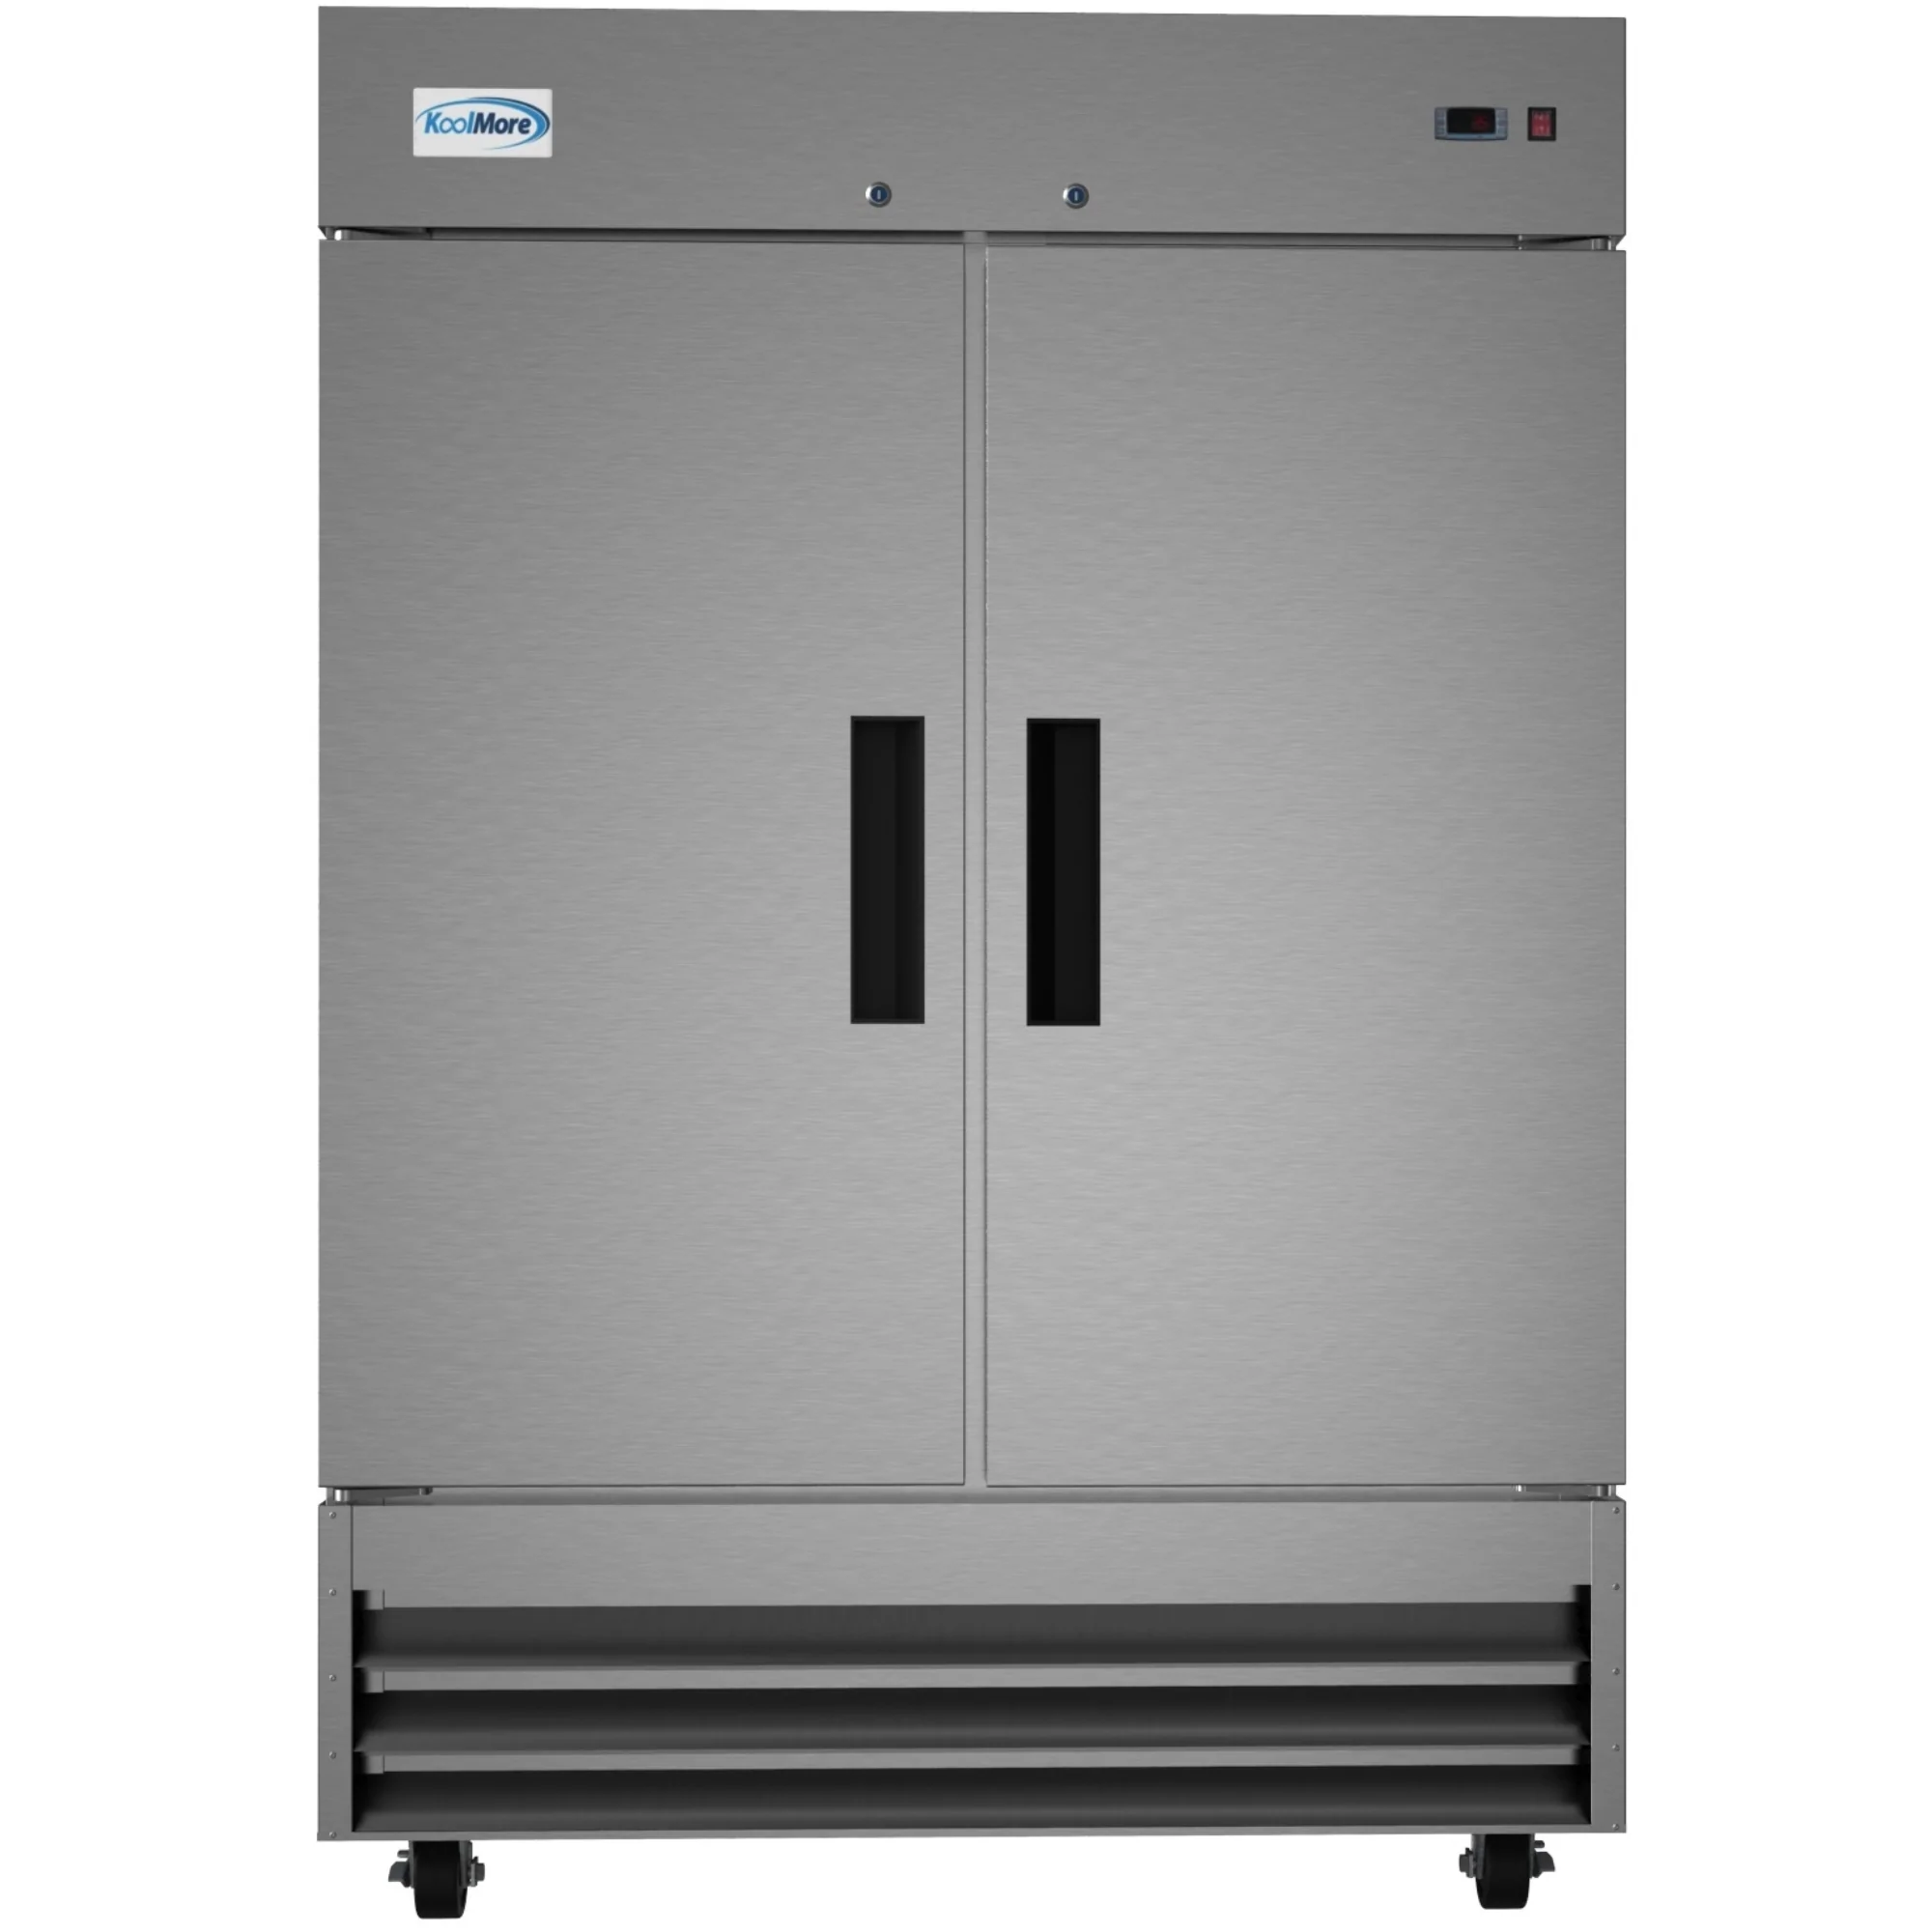 KoolMore 54" 2 Door Stainless Steel Commercial Reach-In Refrigerator Cooler  - 47 cu. ft